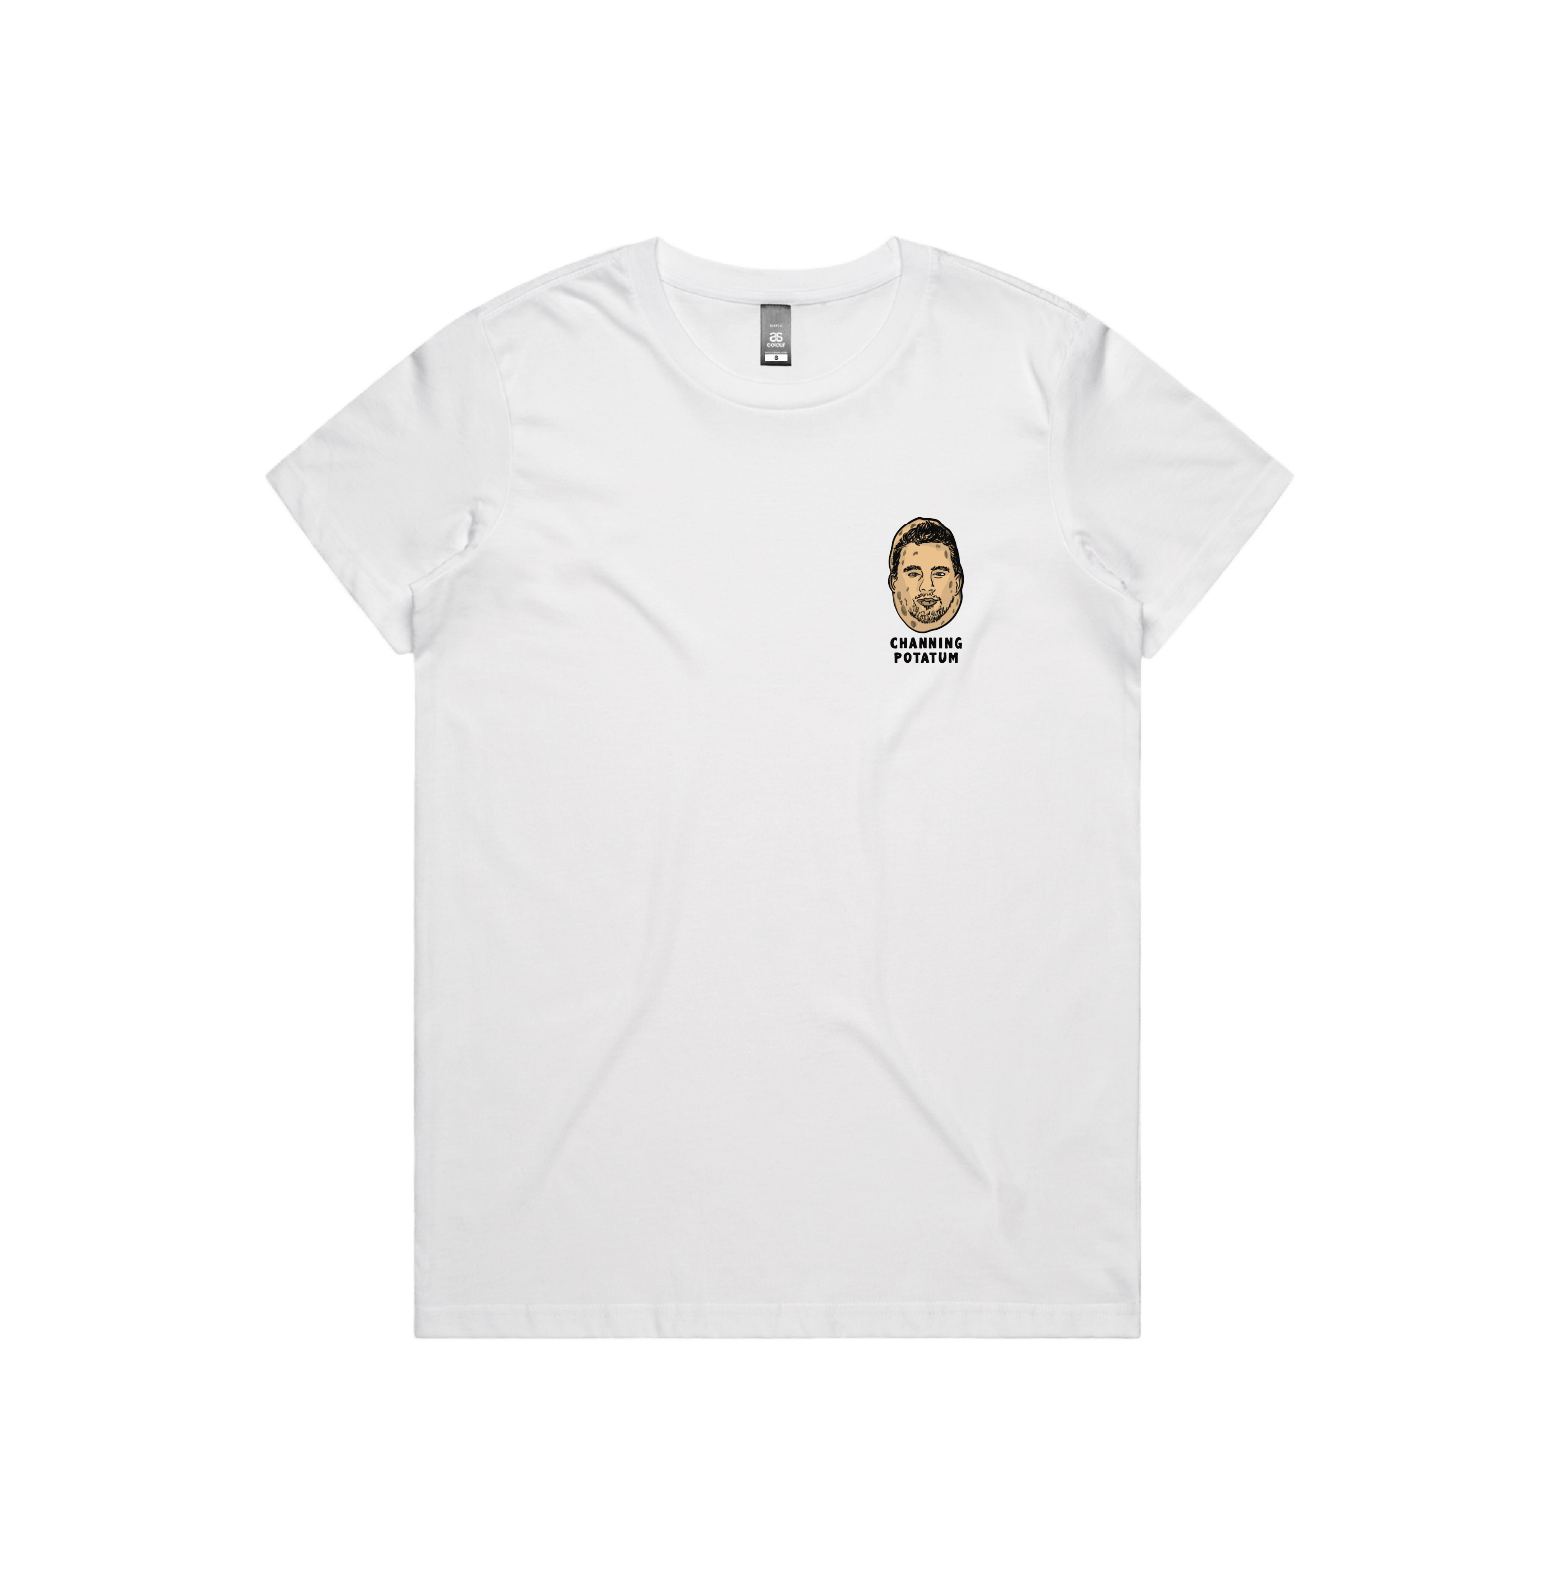 XS / White / Small Front Design Channing Potatum 🥔 - Women's T Shirt